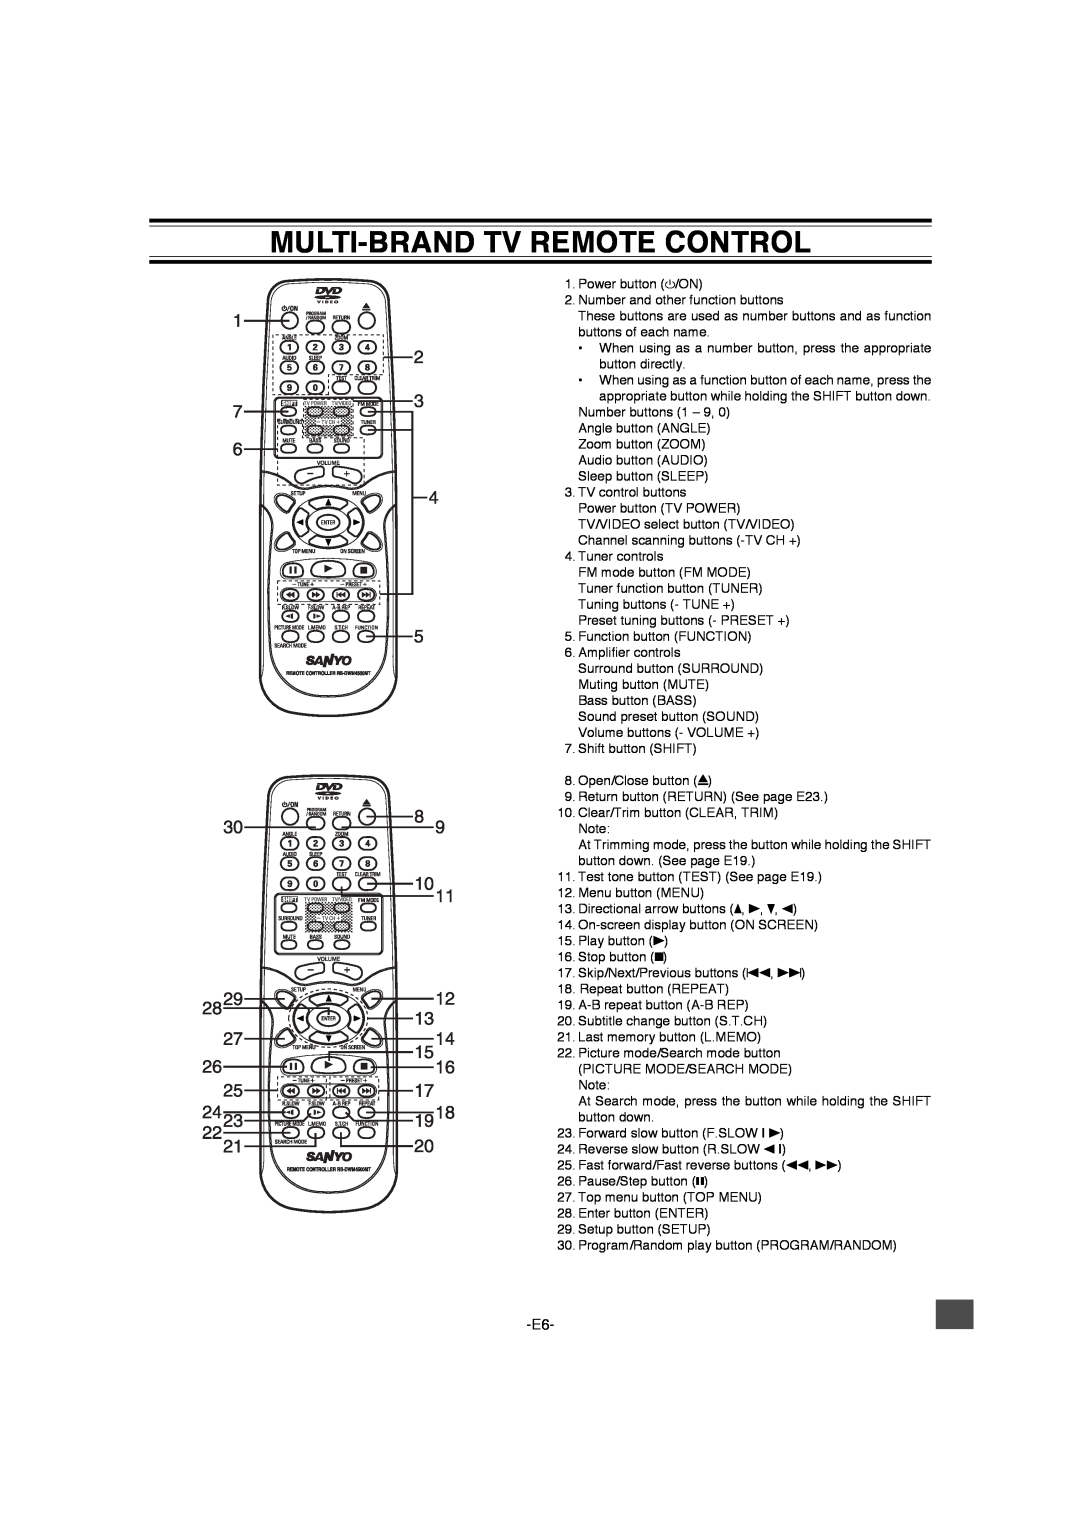 Sanyo DWM-4500 instruction manual Multi-Brandtv Remote Control 